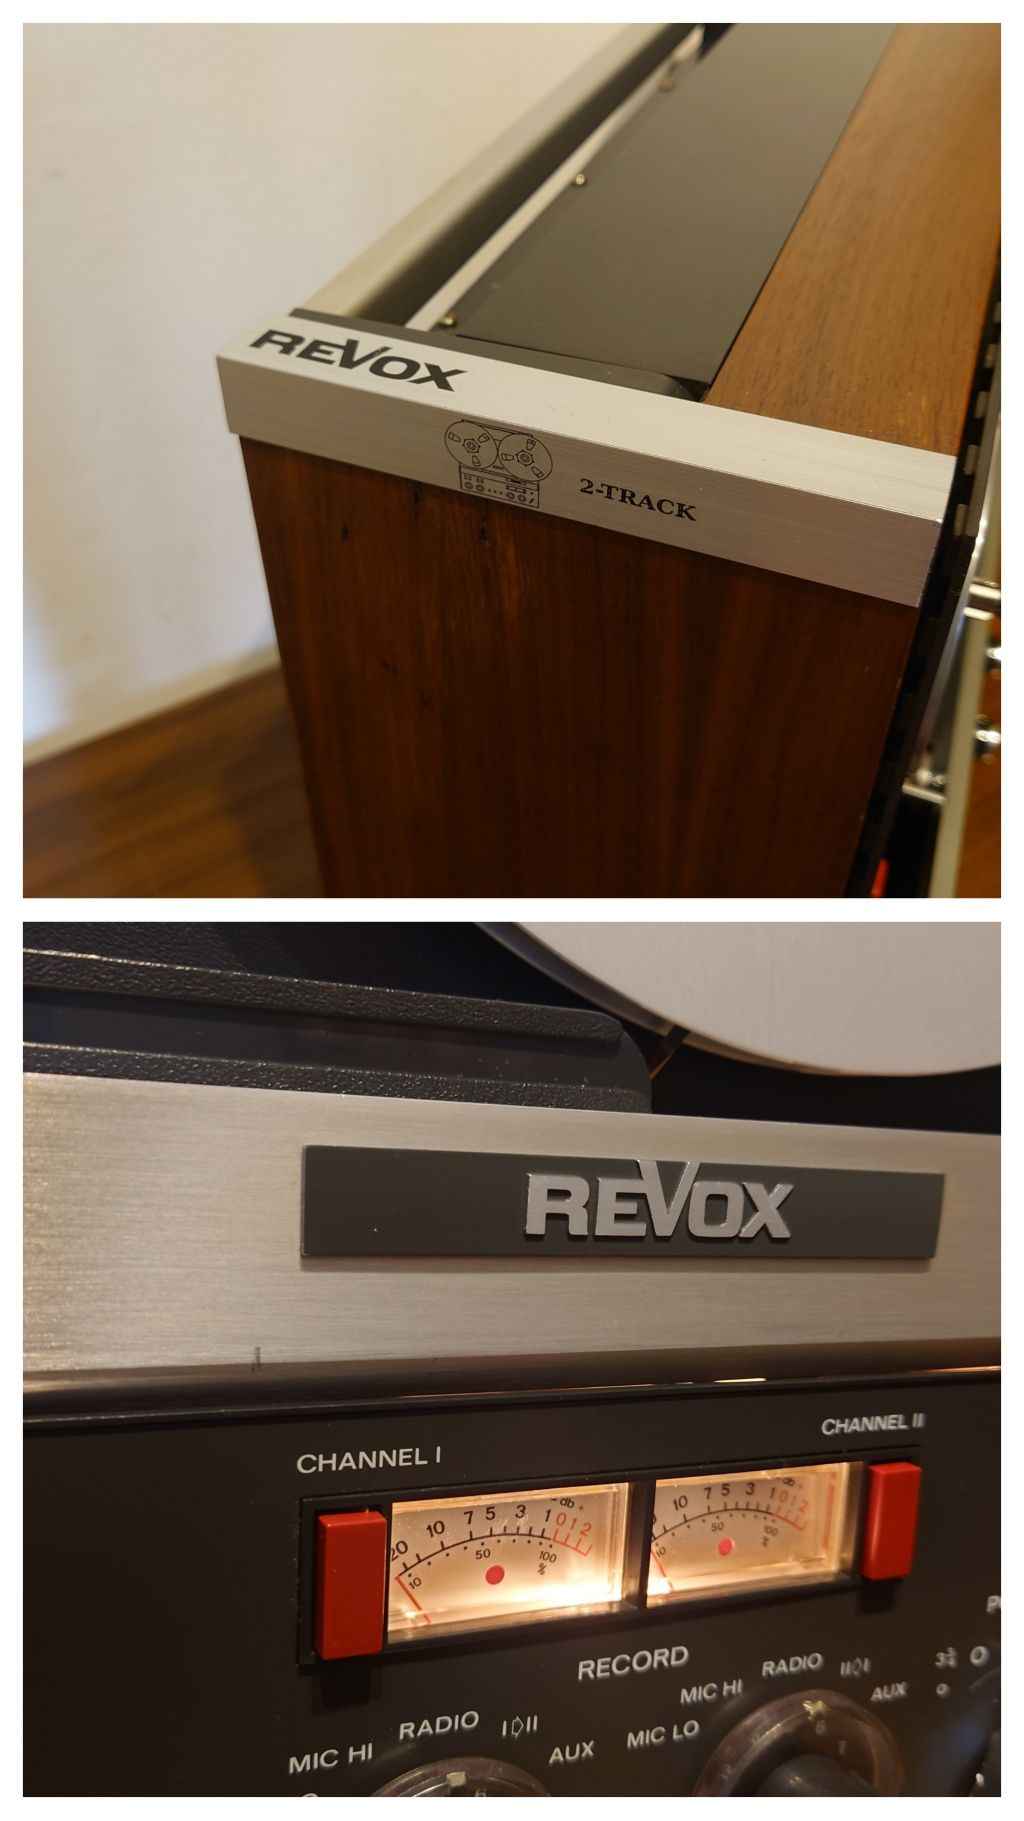 Revox A77 mk I 2track, magnetofon szpulowy + naby Revox + szpule, 72r